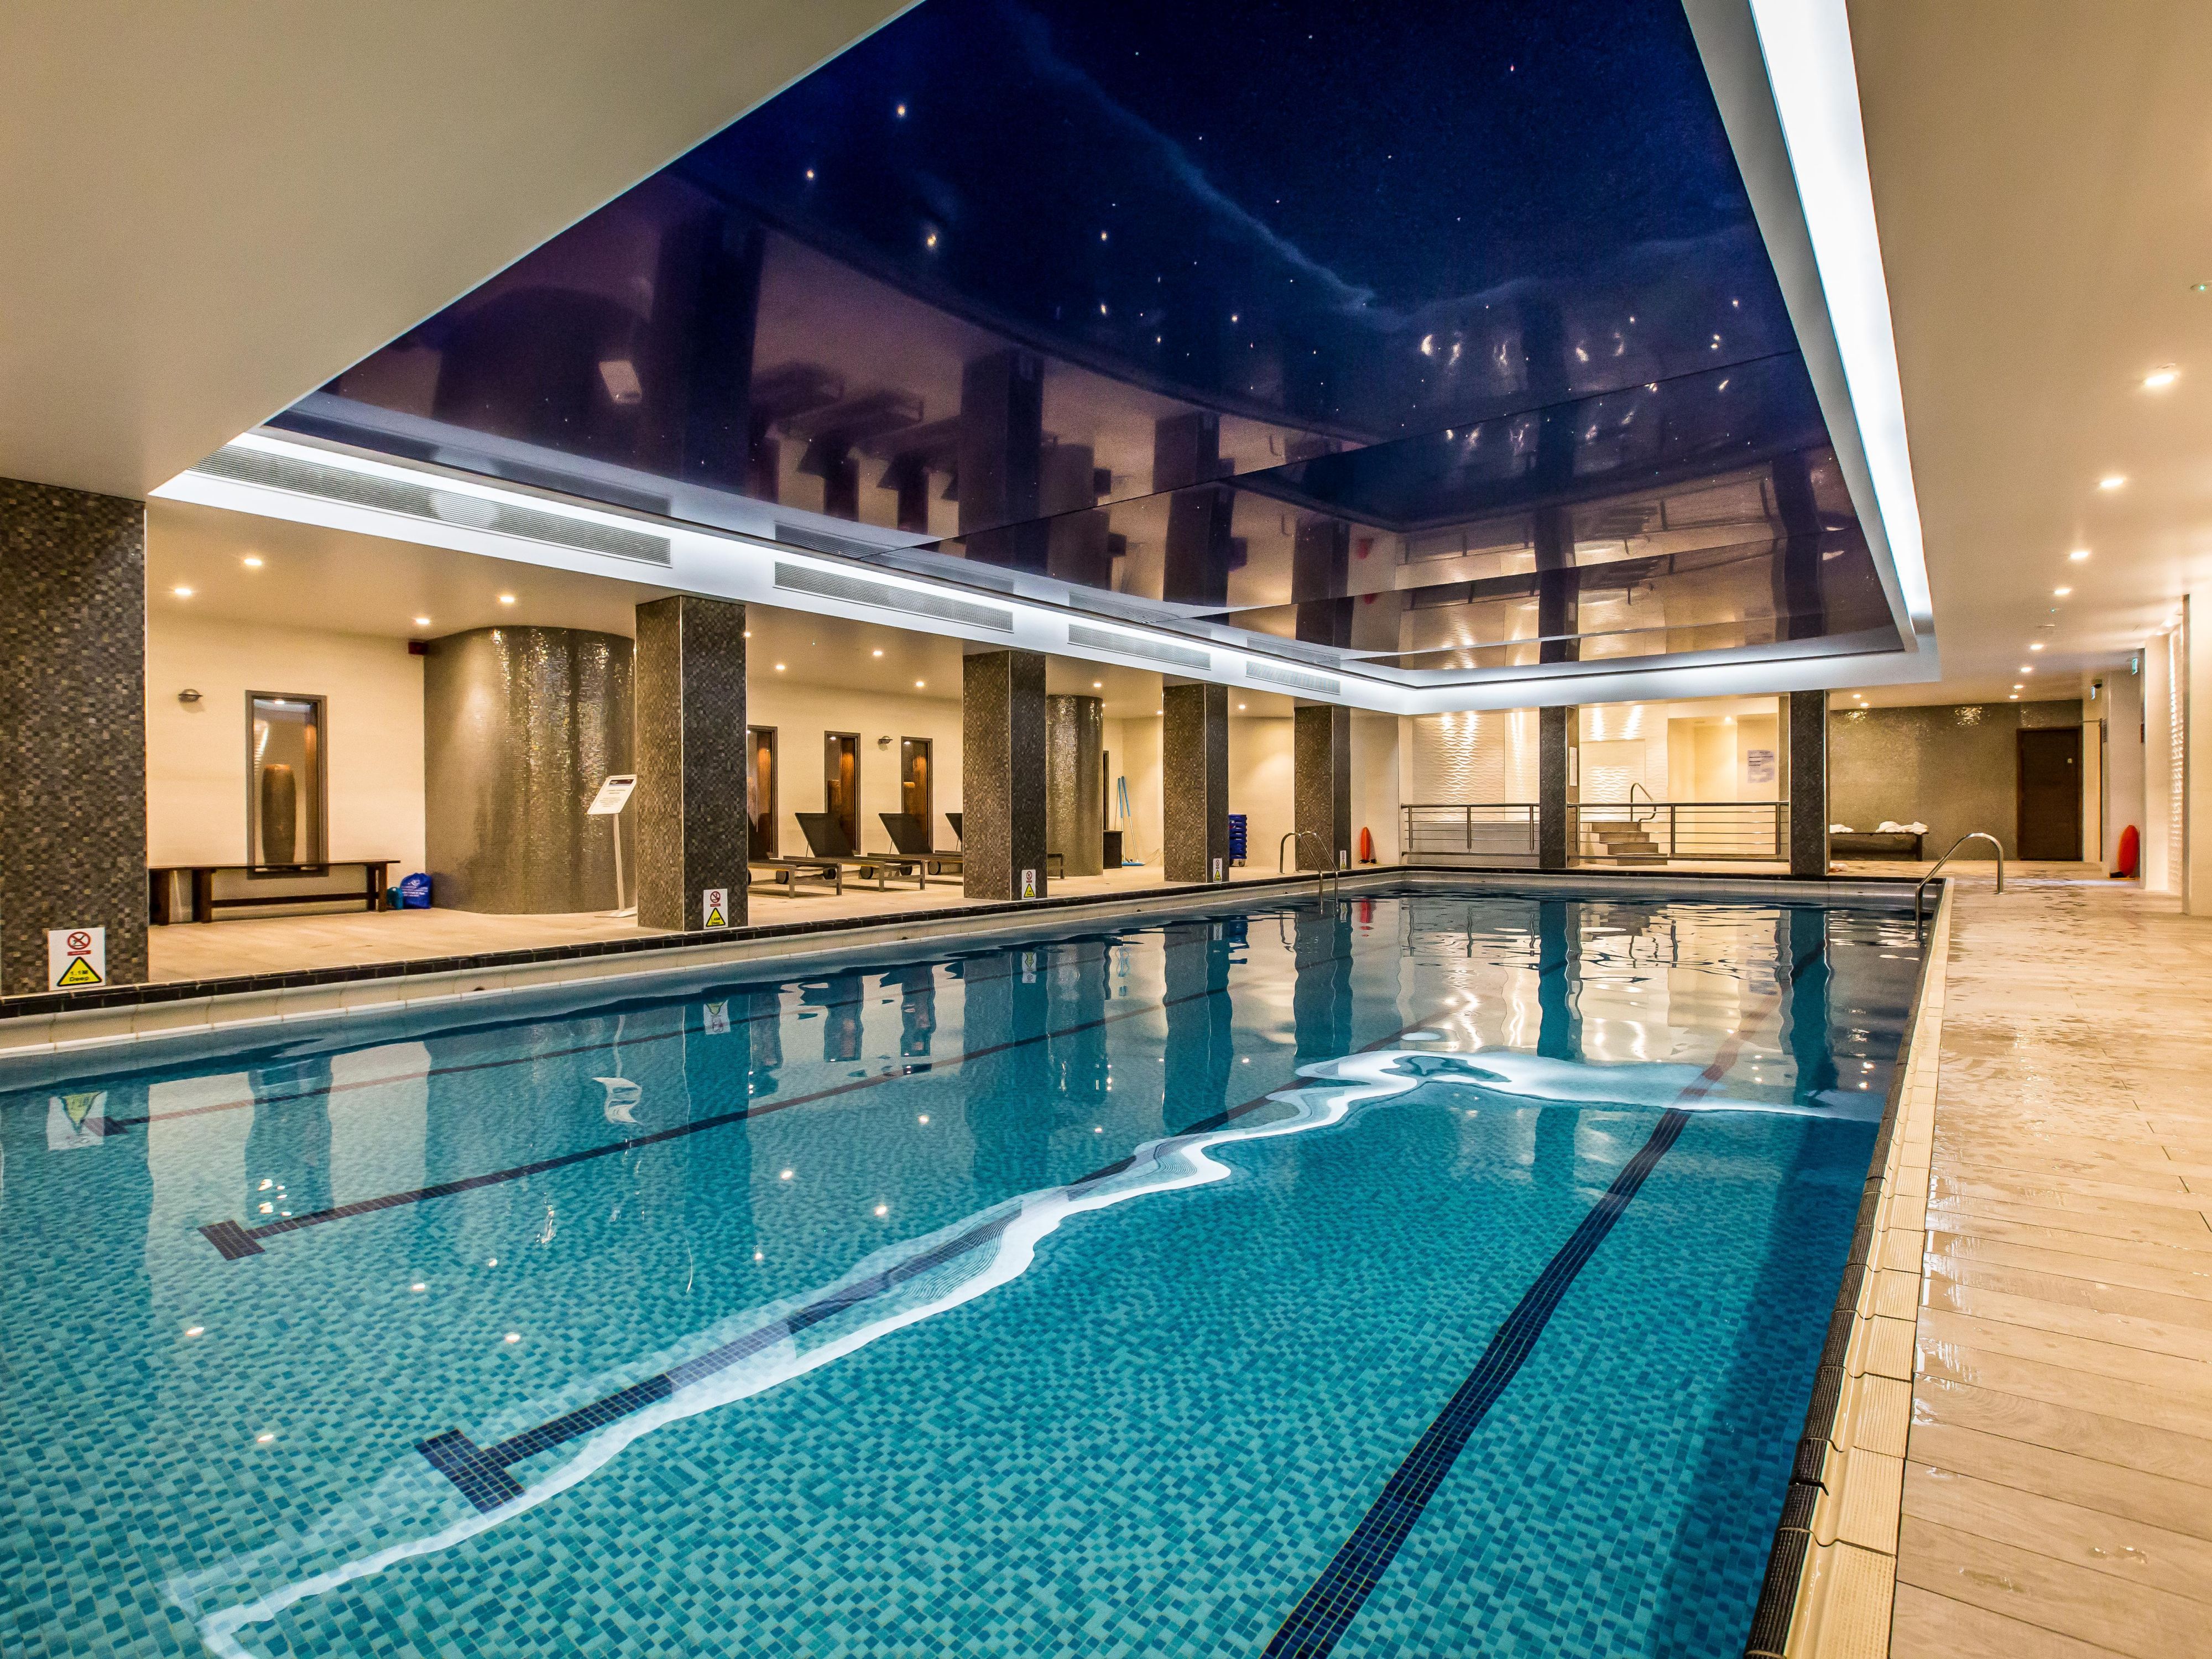 18 metre Indoor heated swimming pool
£5pp Entrance Fee, Kids go Free